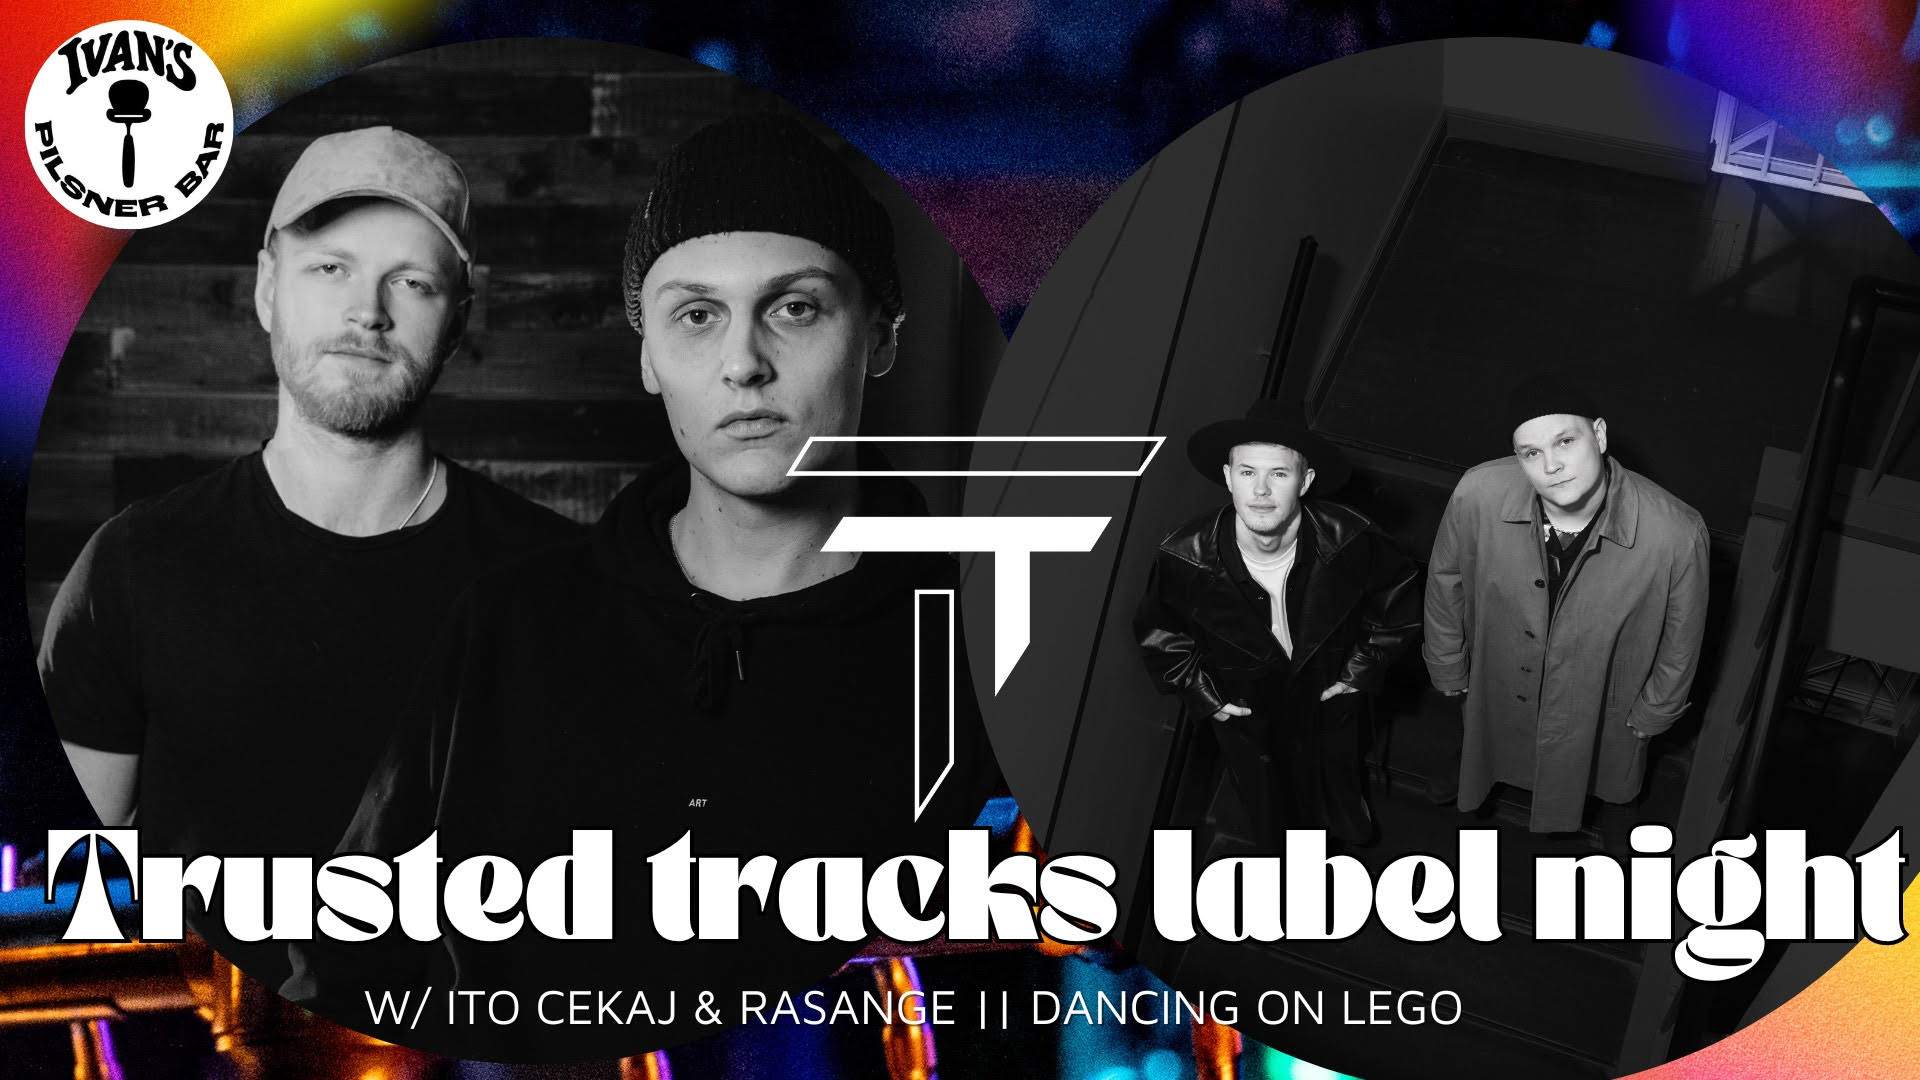 Trusted tracks label night [Ito Cekaj & Dancing on Lego] - Página frontal